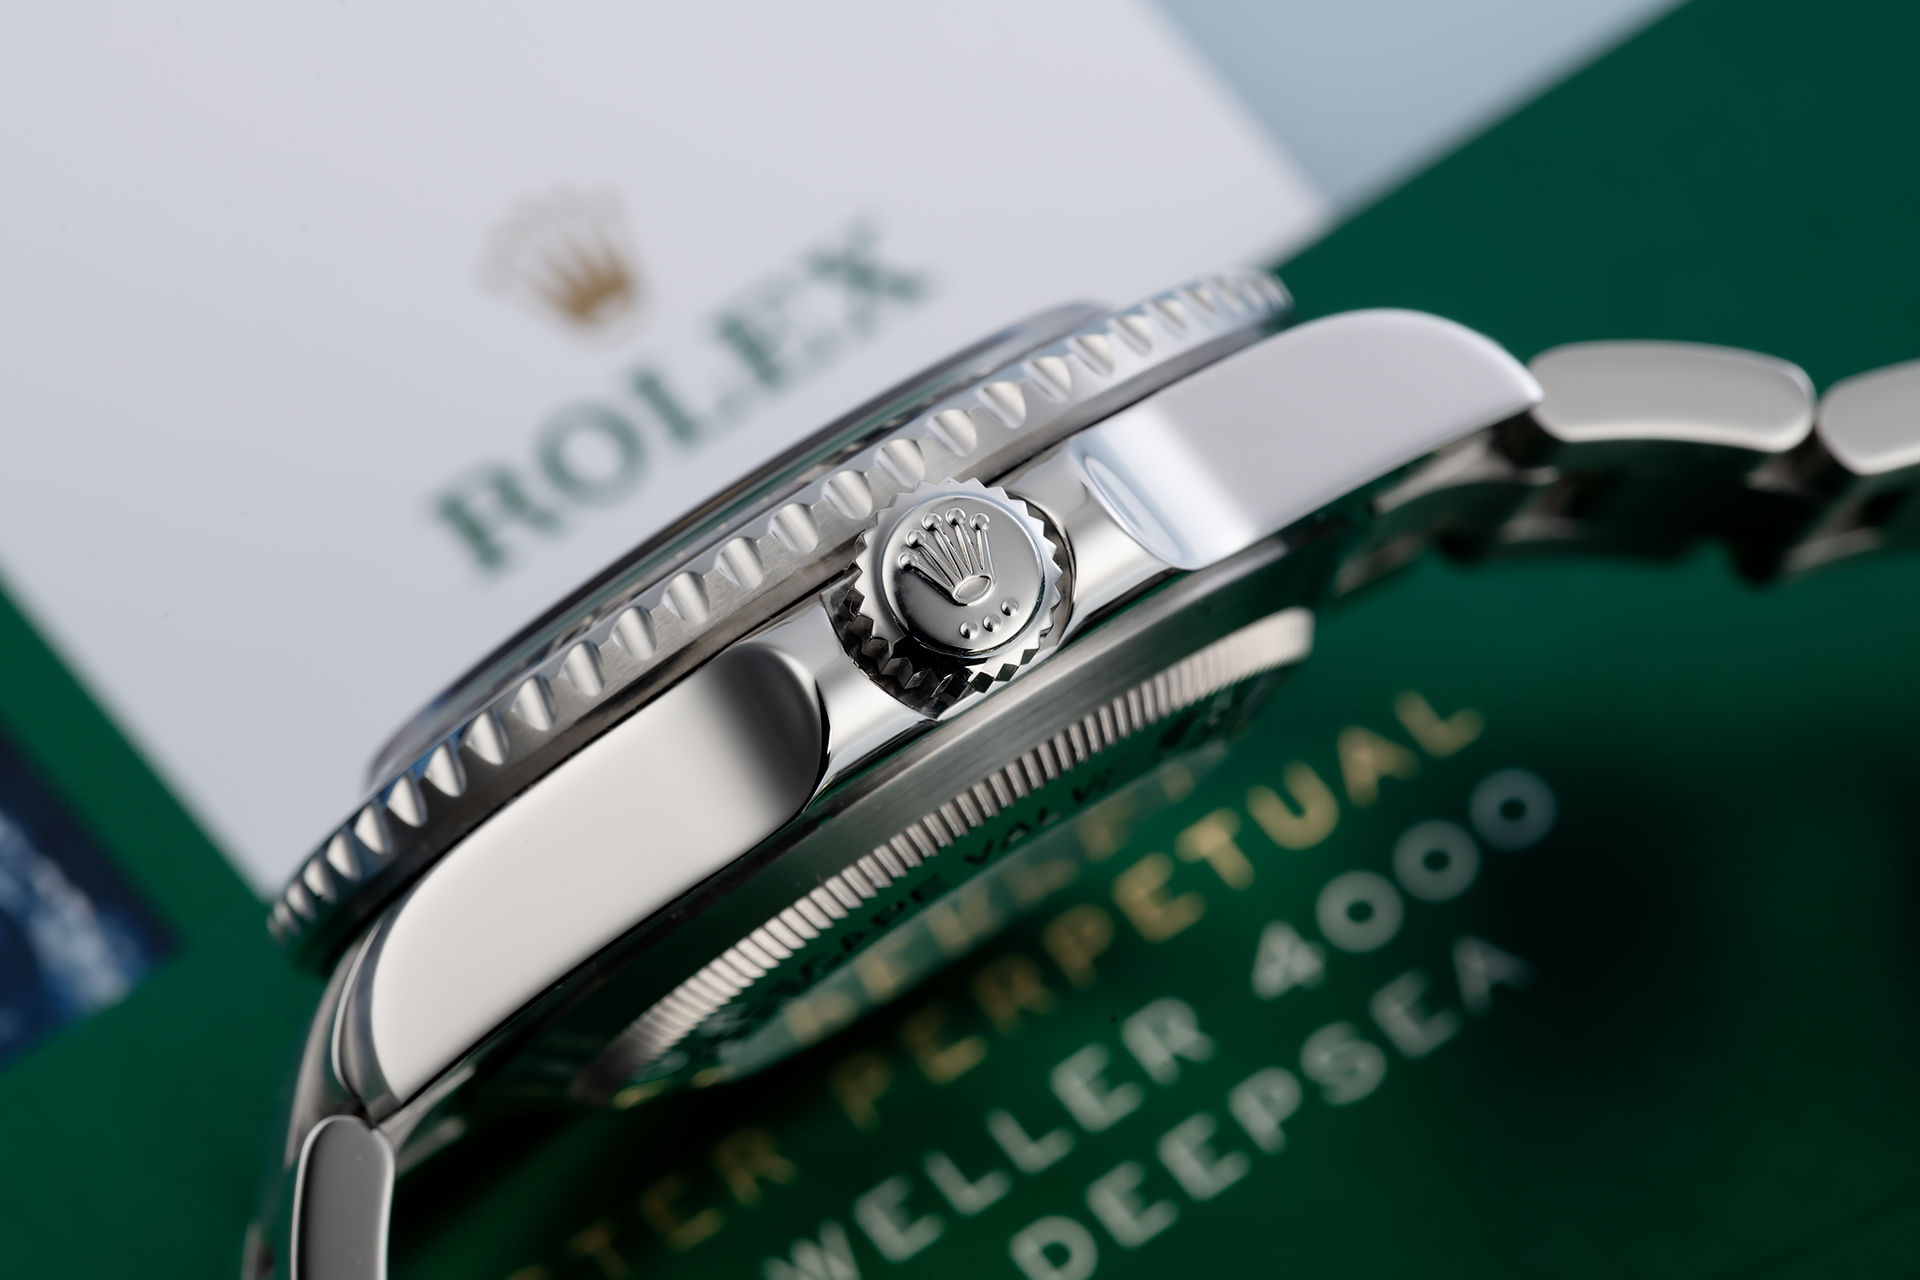 ref 116600 | 'Two Year Rolex Service Warranty' | Rolex Sea-Dweller 4000